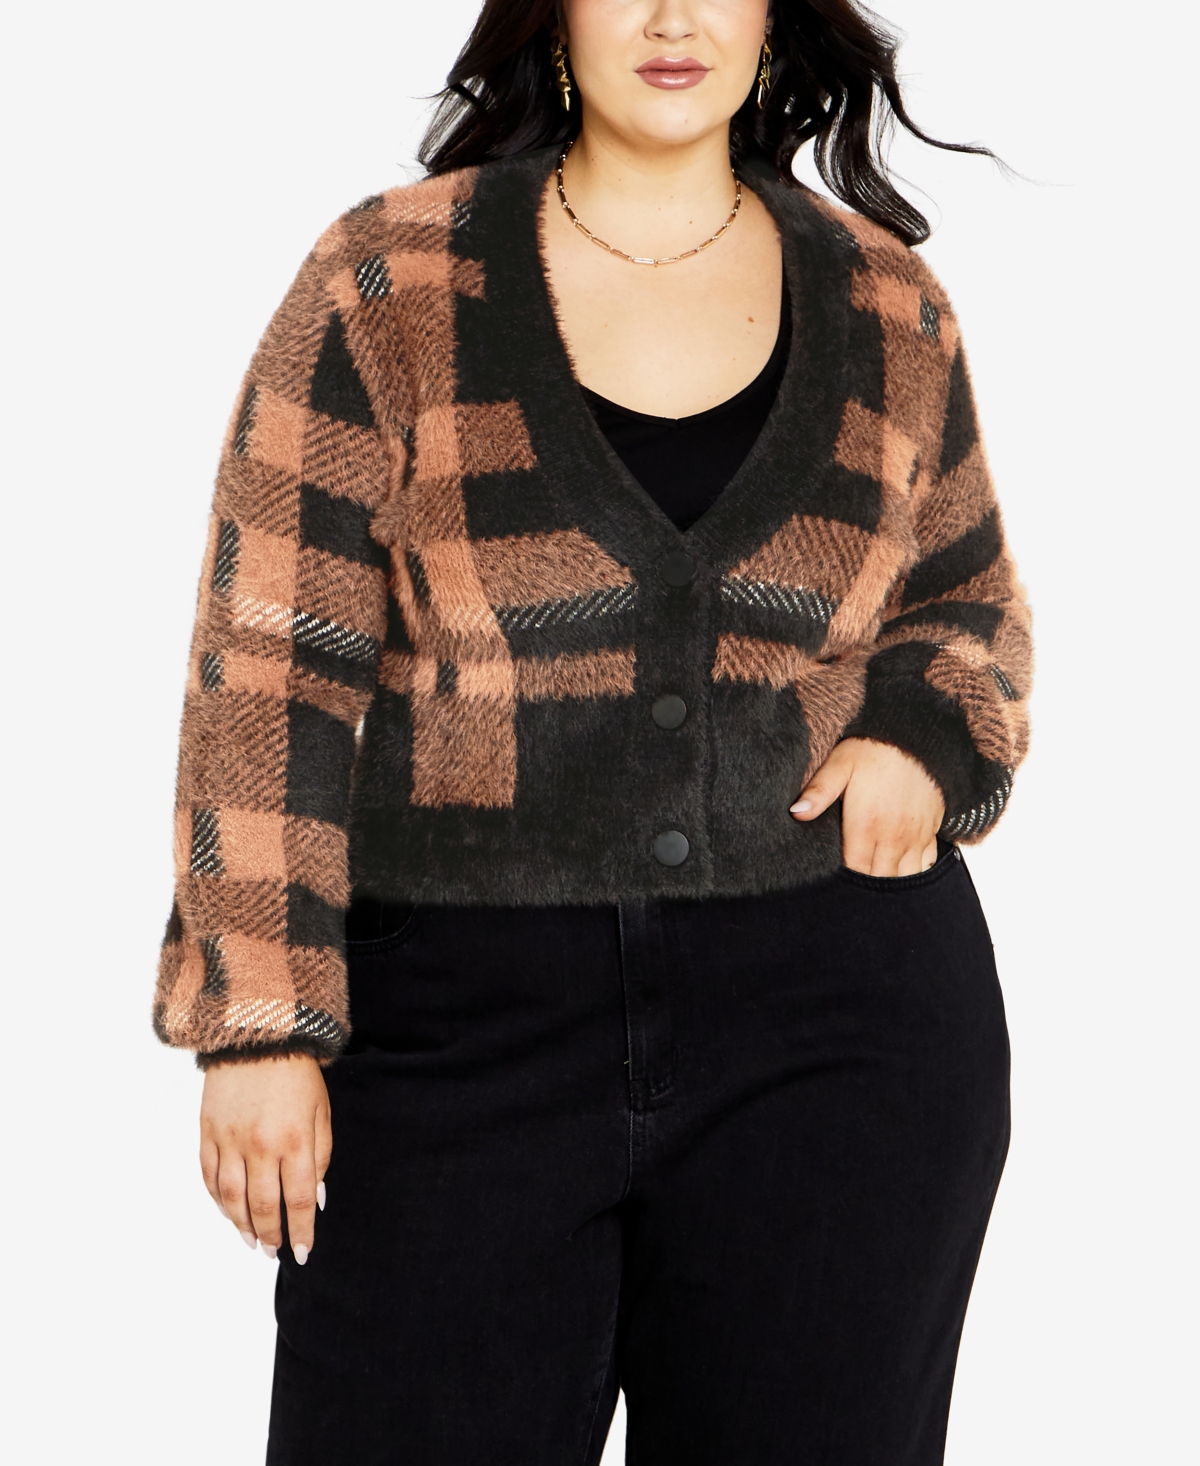 City Chic Trendy Plus Size Naomi V-neck Cardigan Sweater